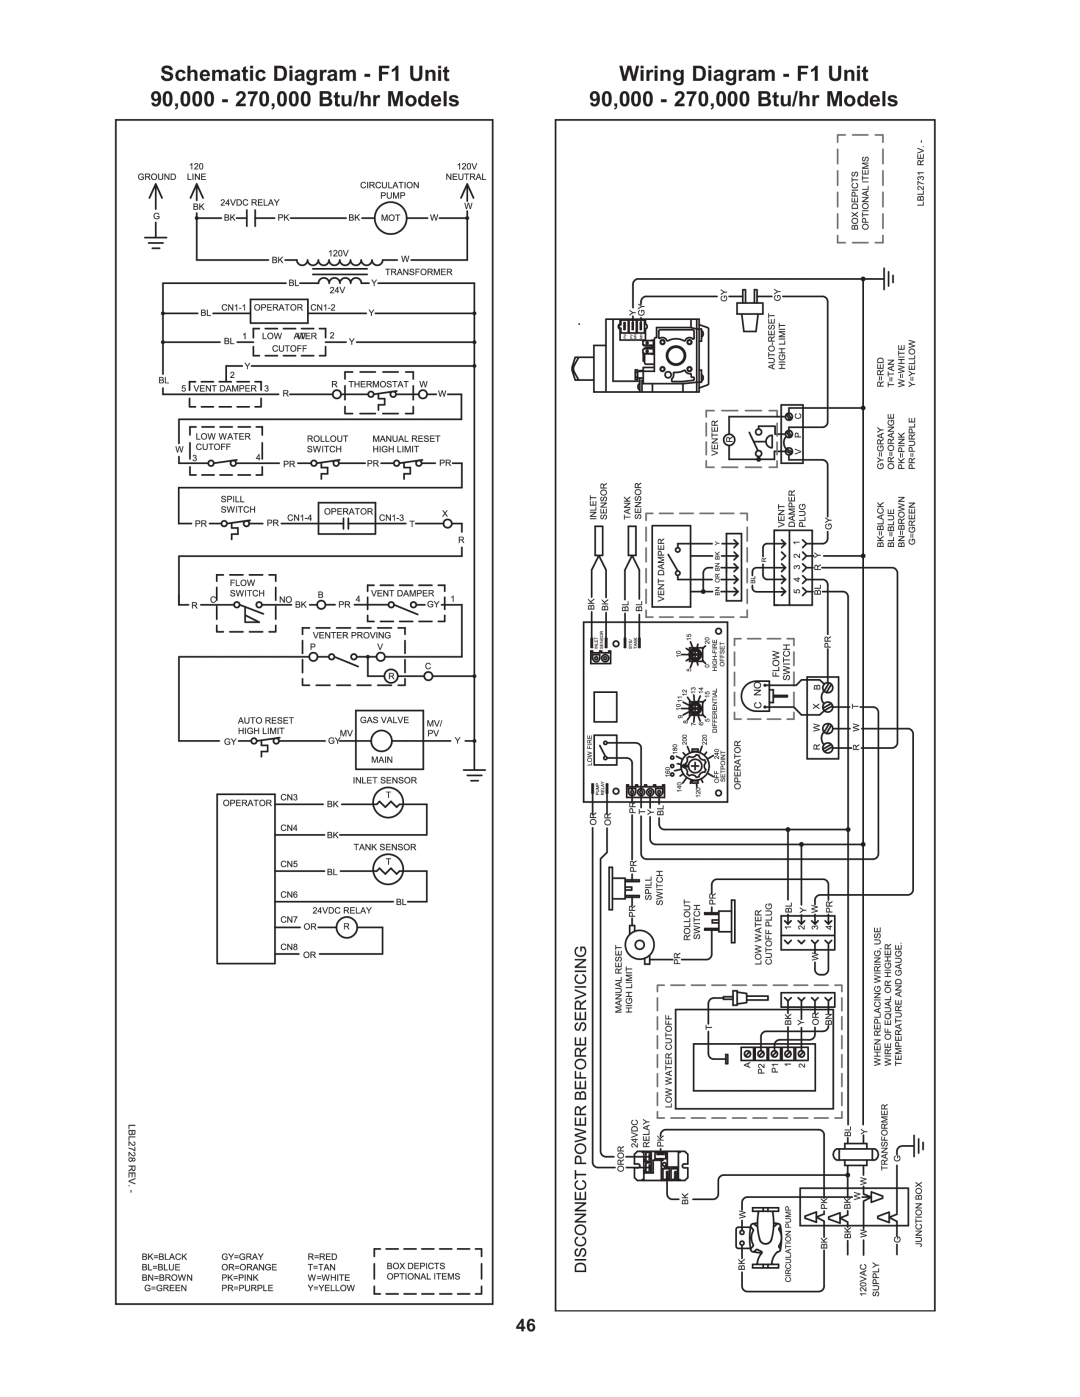 Lochinvar 45, CP-5M-4/08, RSB-i&s-05 Schematic Diagram - F1 Unit, 90,000 - 270,000 Btu/hr Models, Wiring Diagram - F1 Unit 